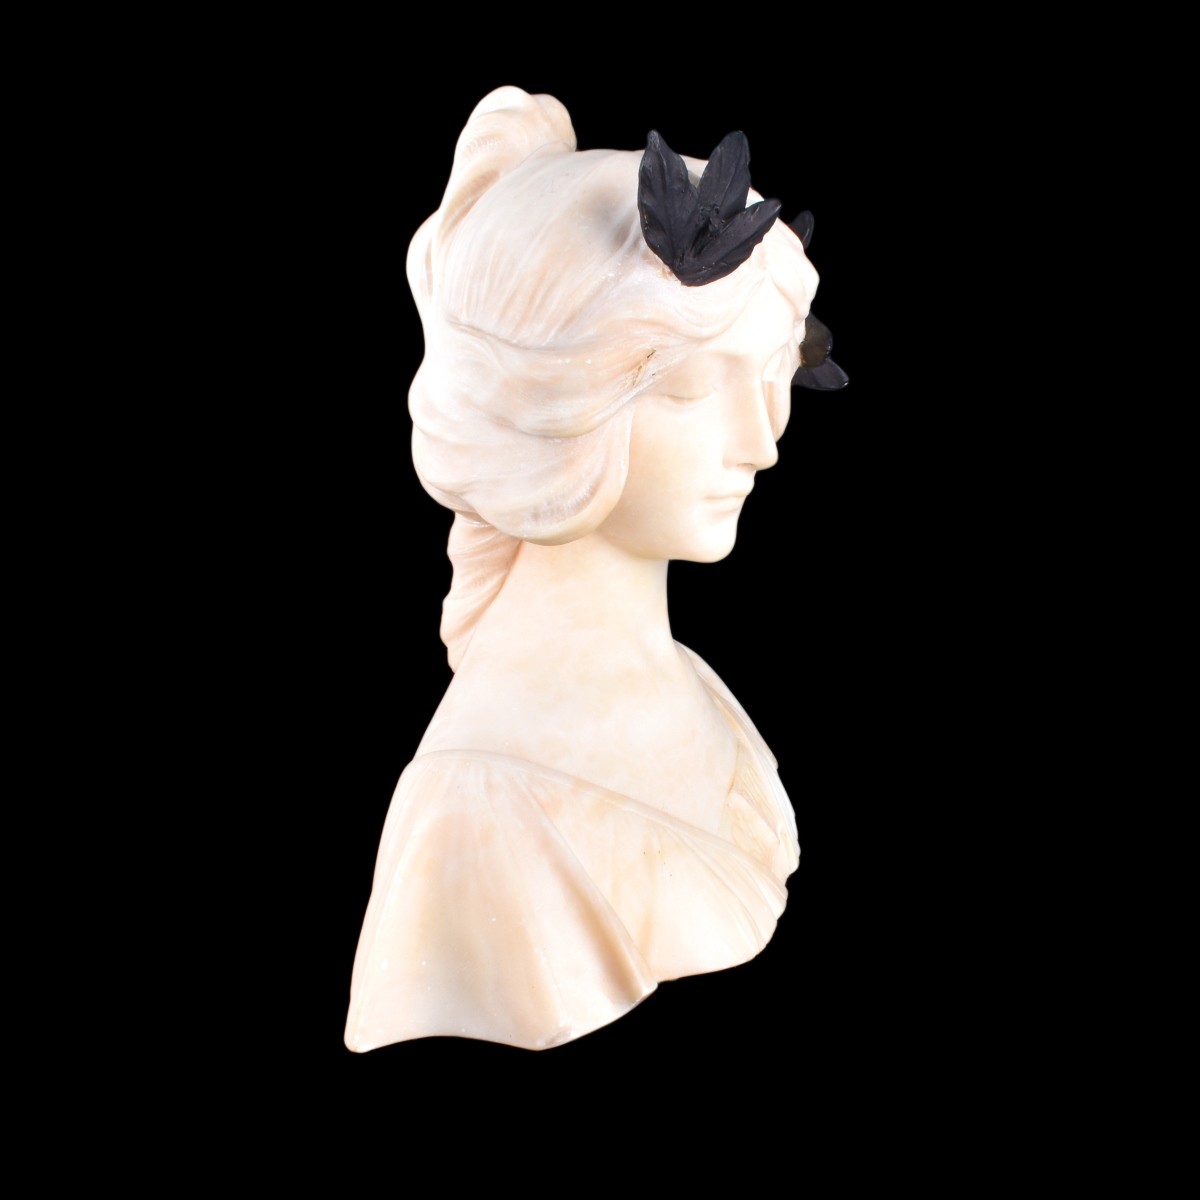 A. Gennai, Italian (19C) Alabaster Bust Of Sappho